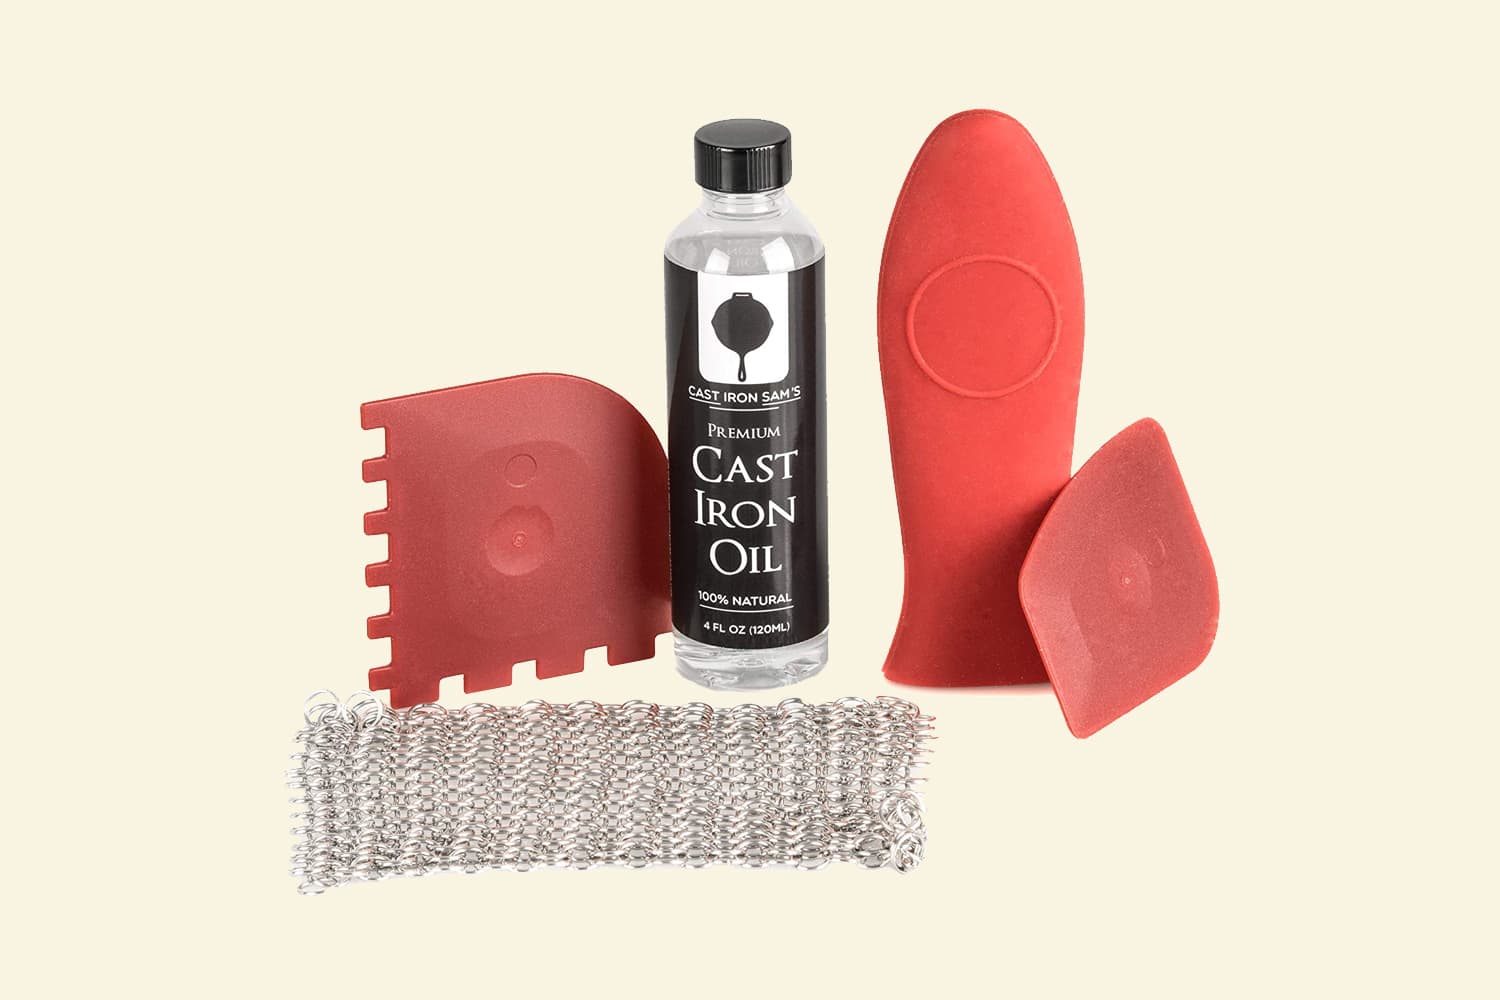 Cast Iron Care Kit